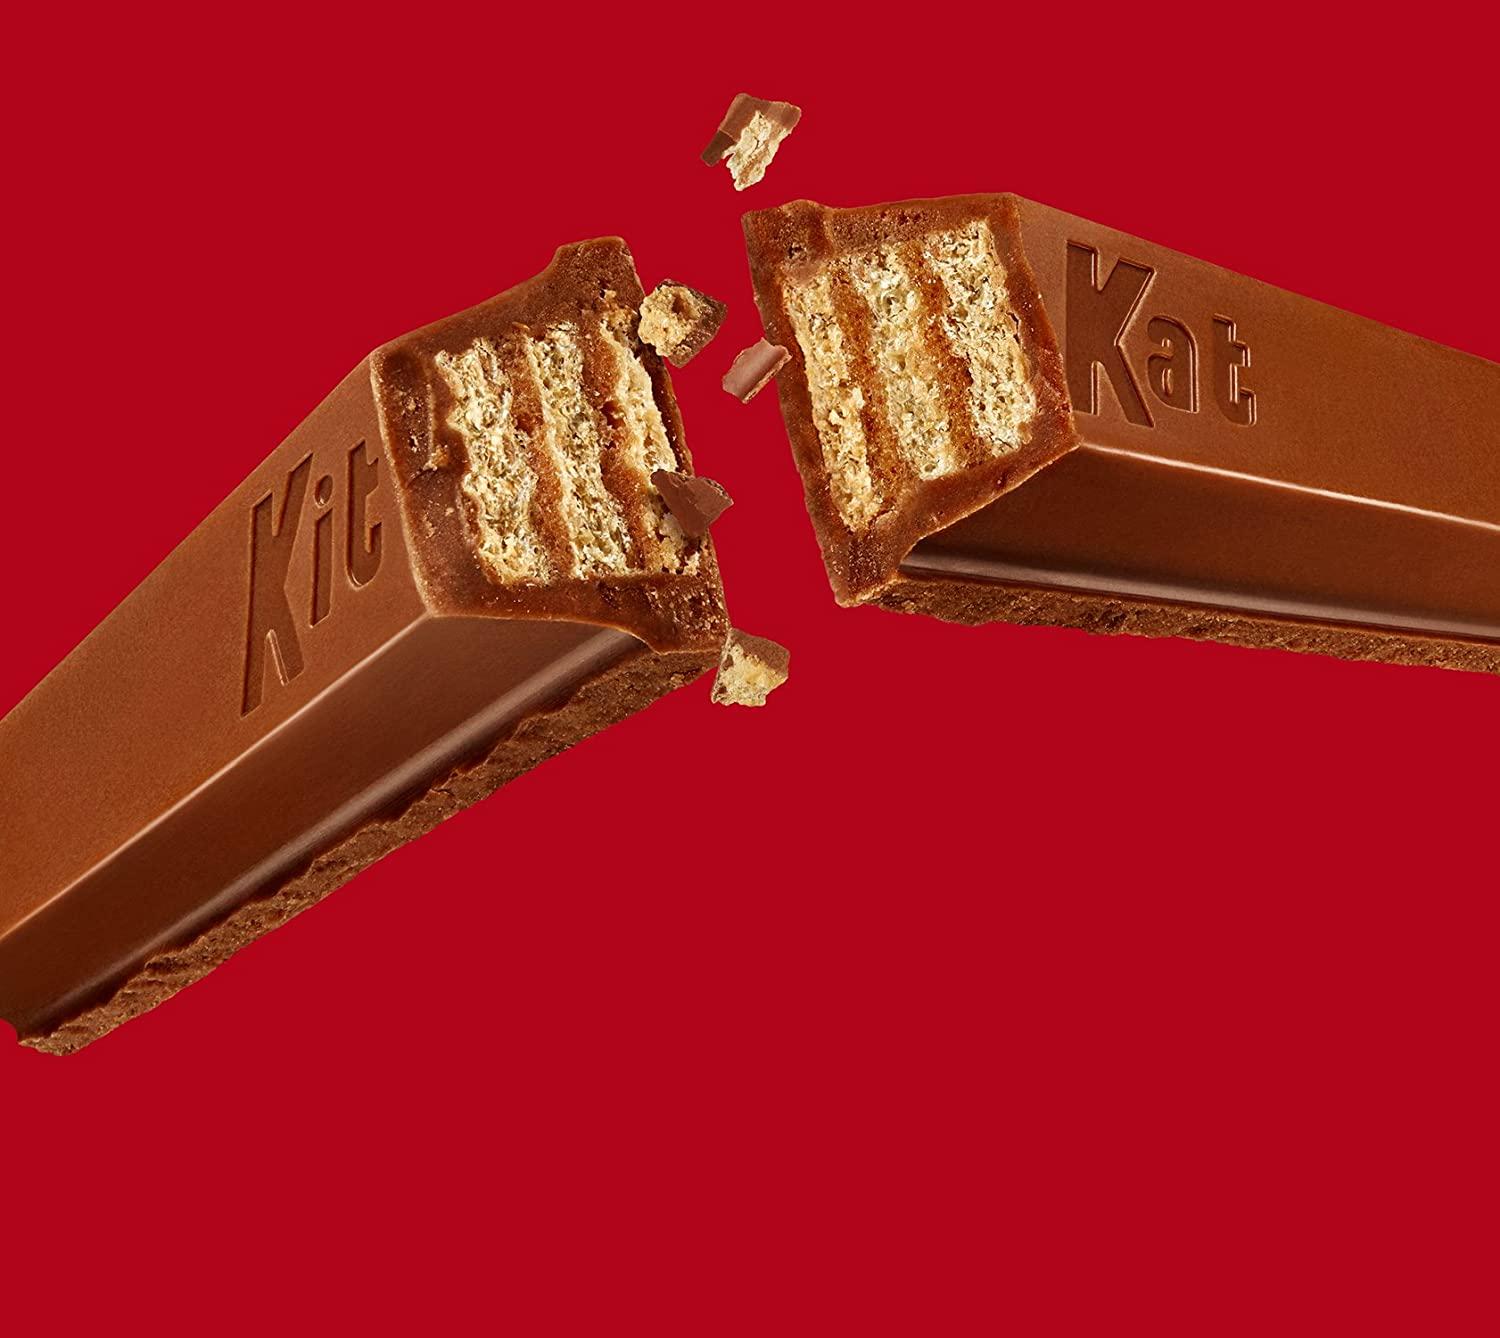 KIT KAT Chocolate Candy Bars, 20.1 Ounce